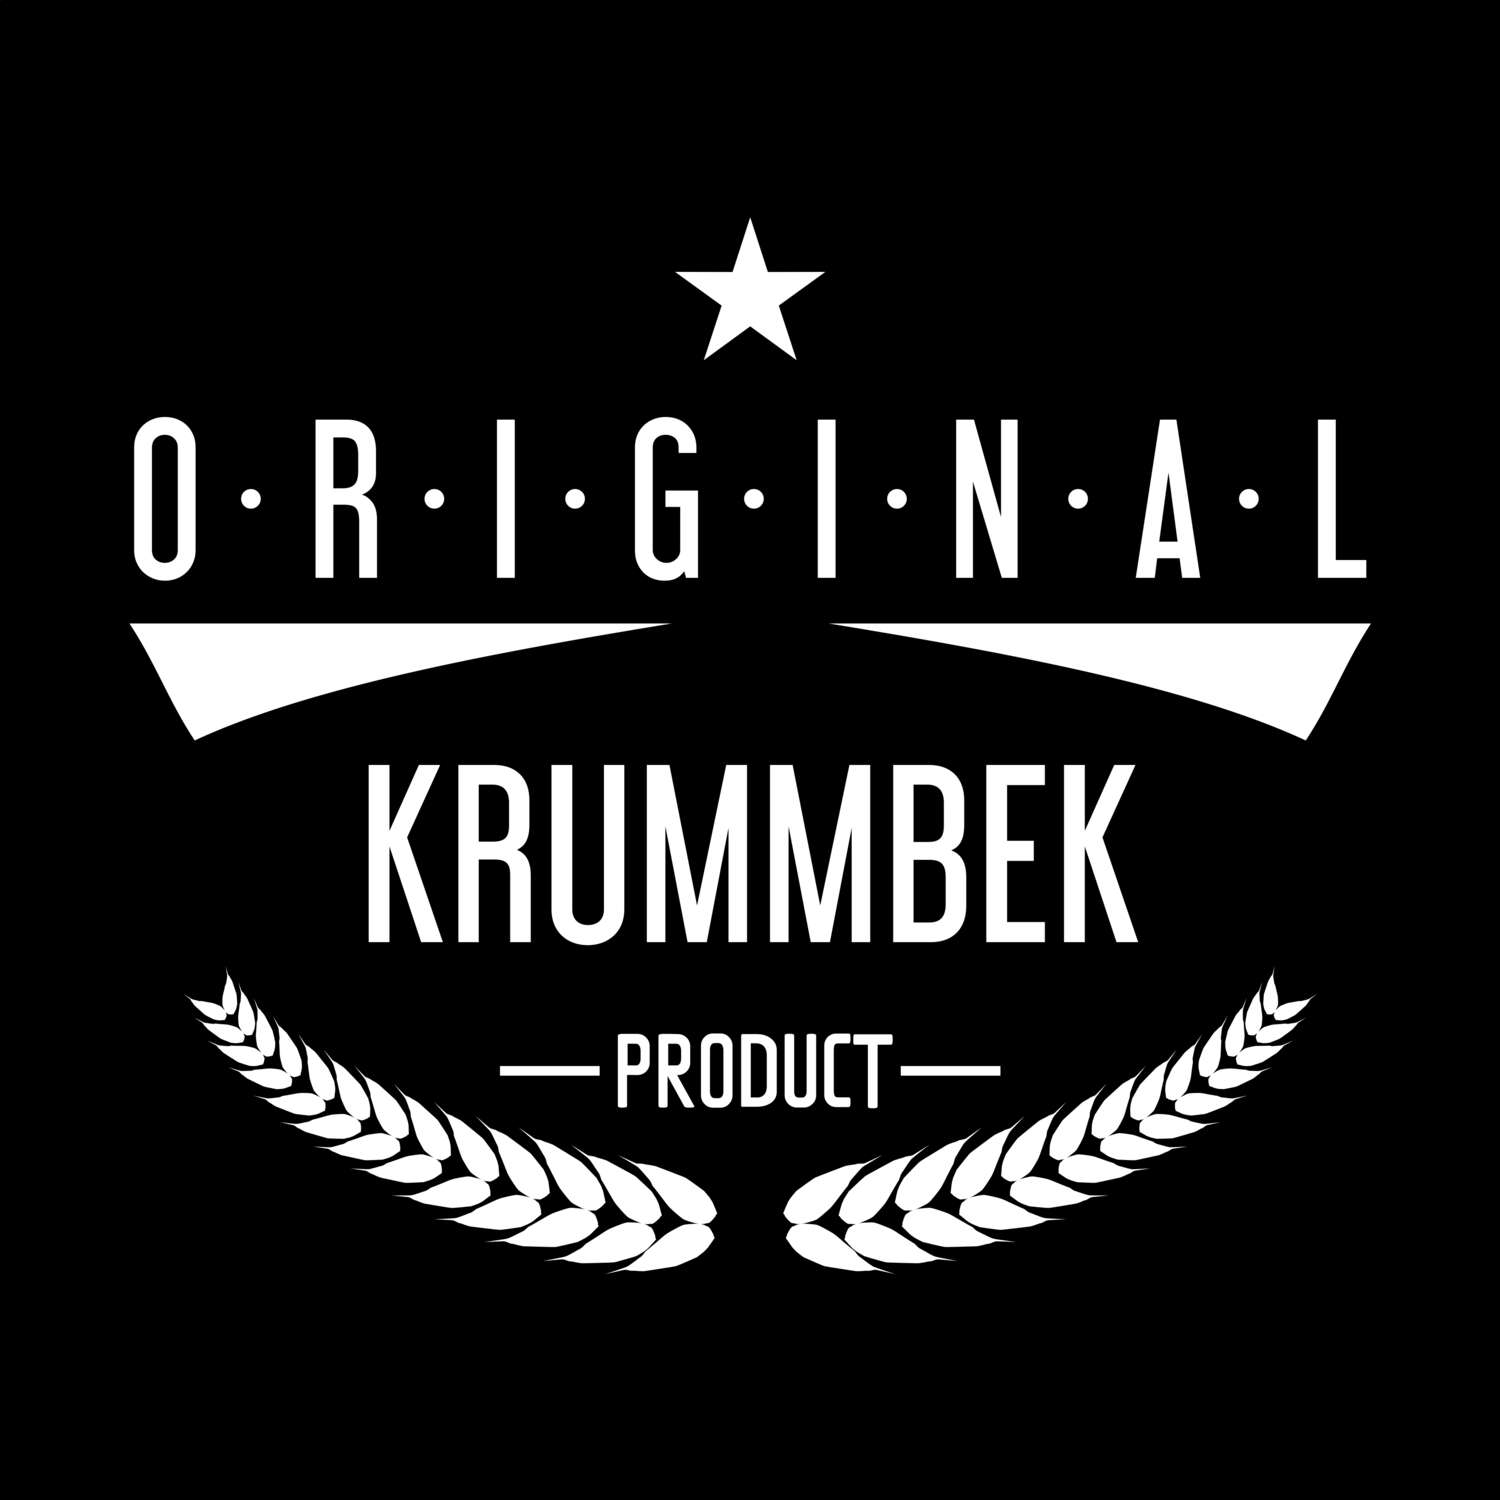 Krummbek T-Shirt »Original Product«